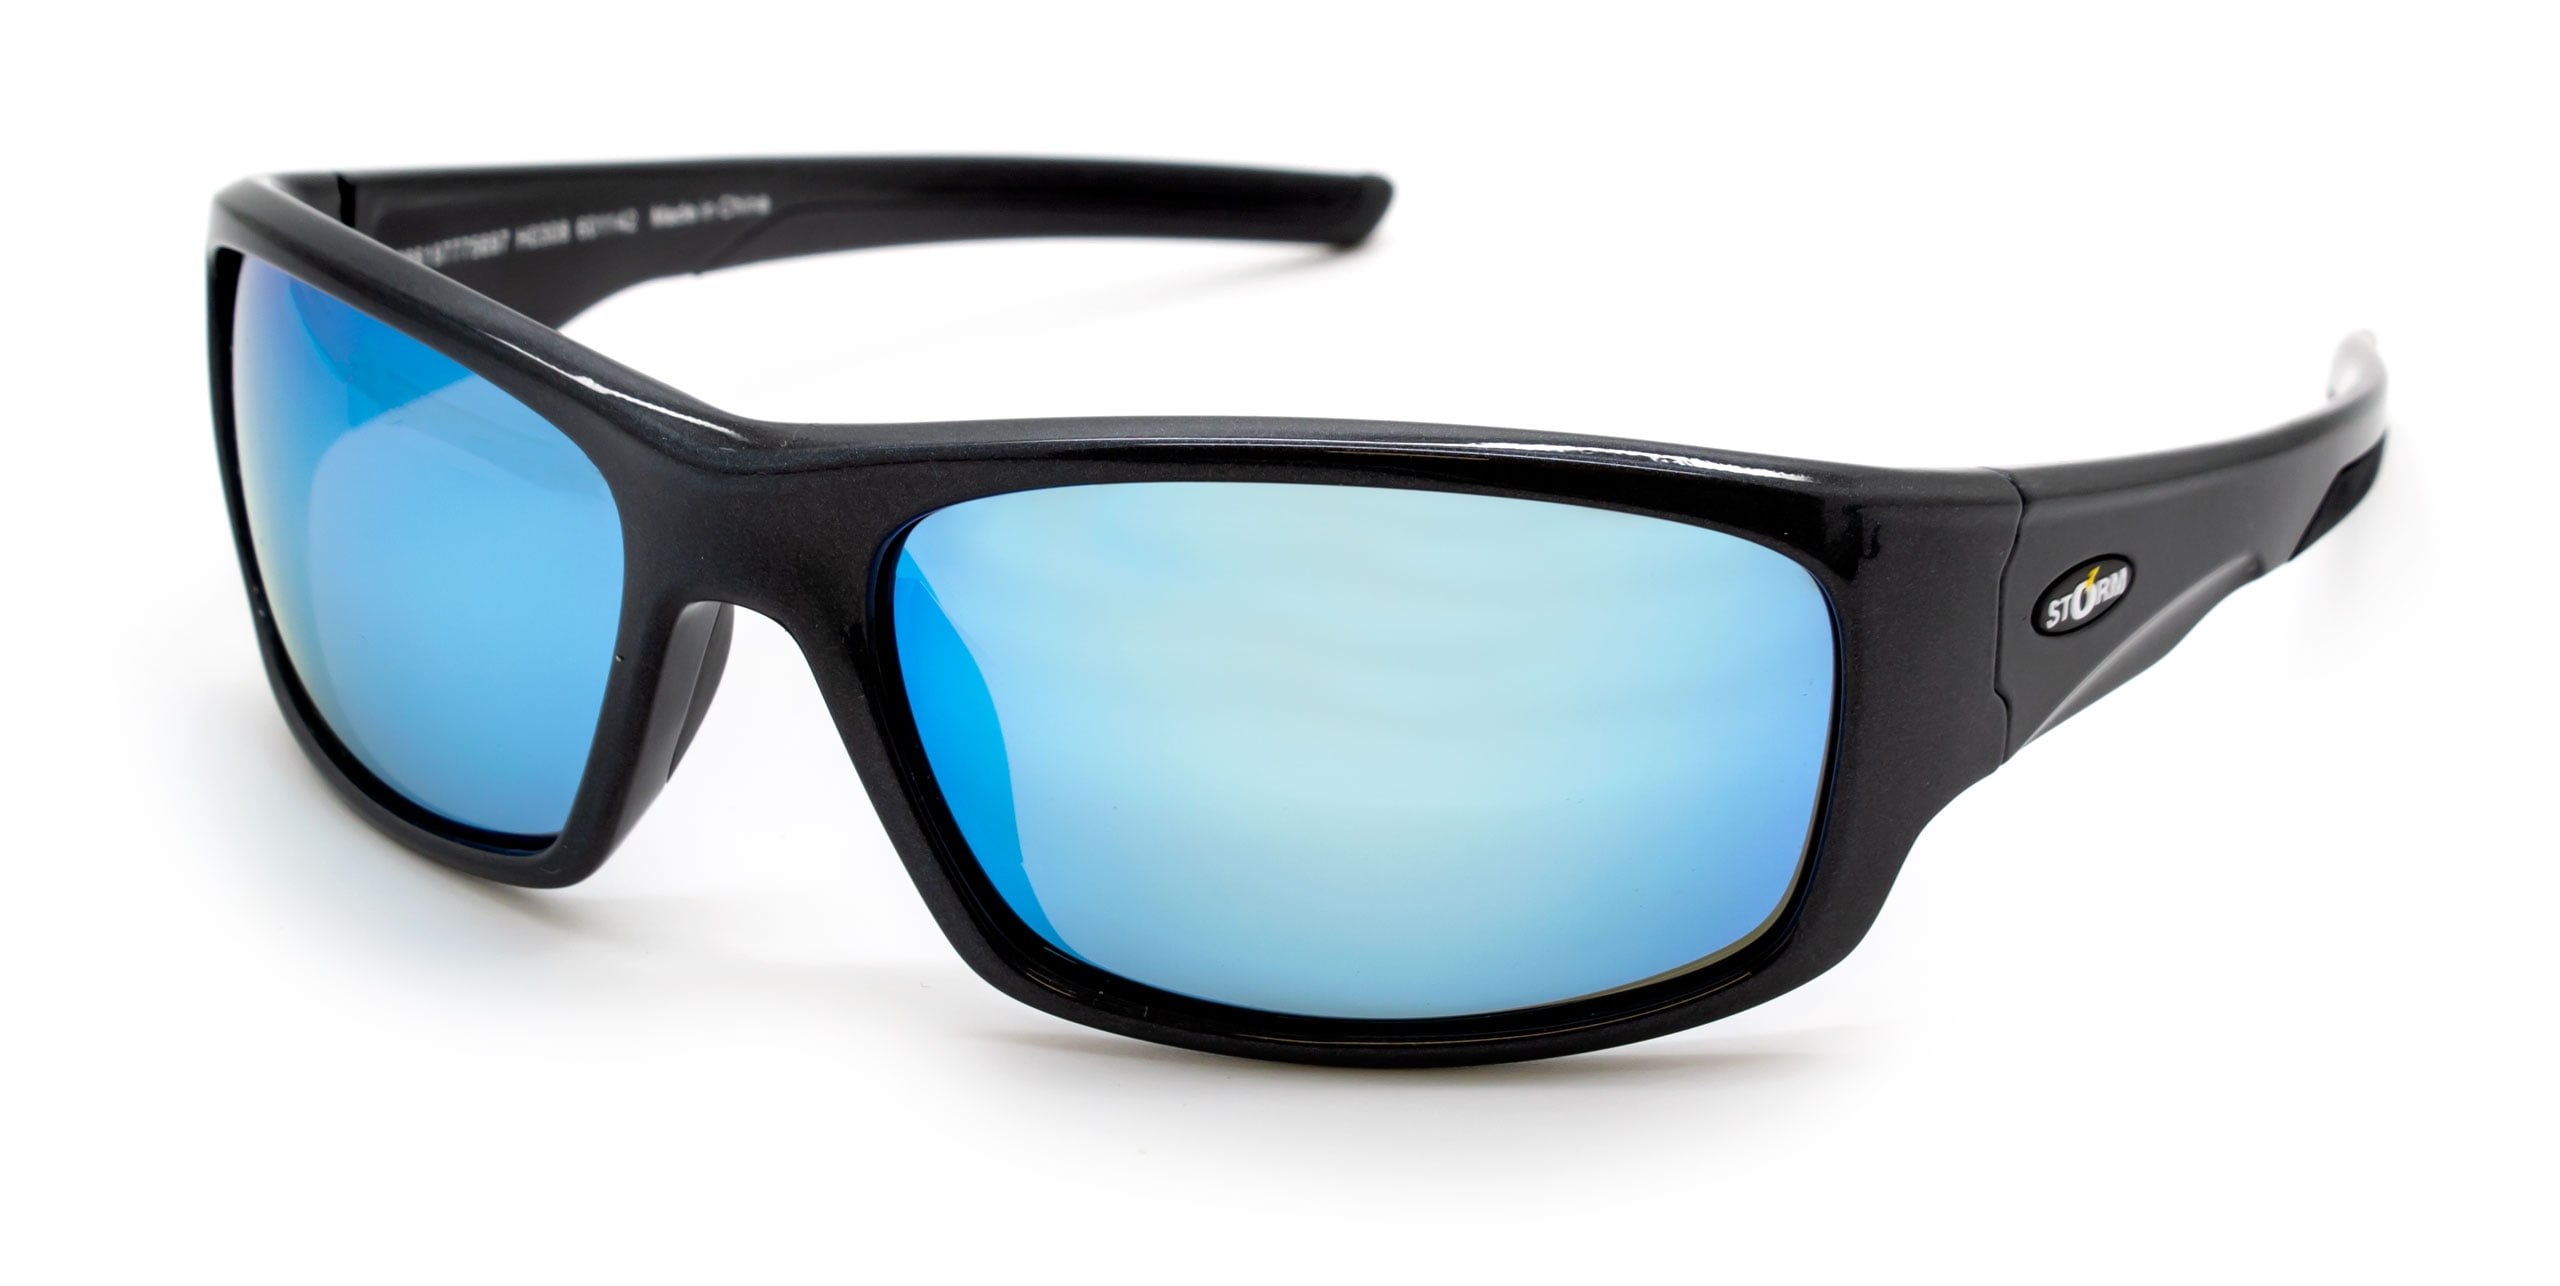 Storm Polarized Full Frame Fishing Sunglasses, STF-690046